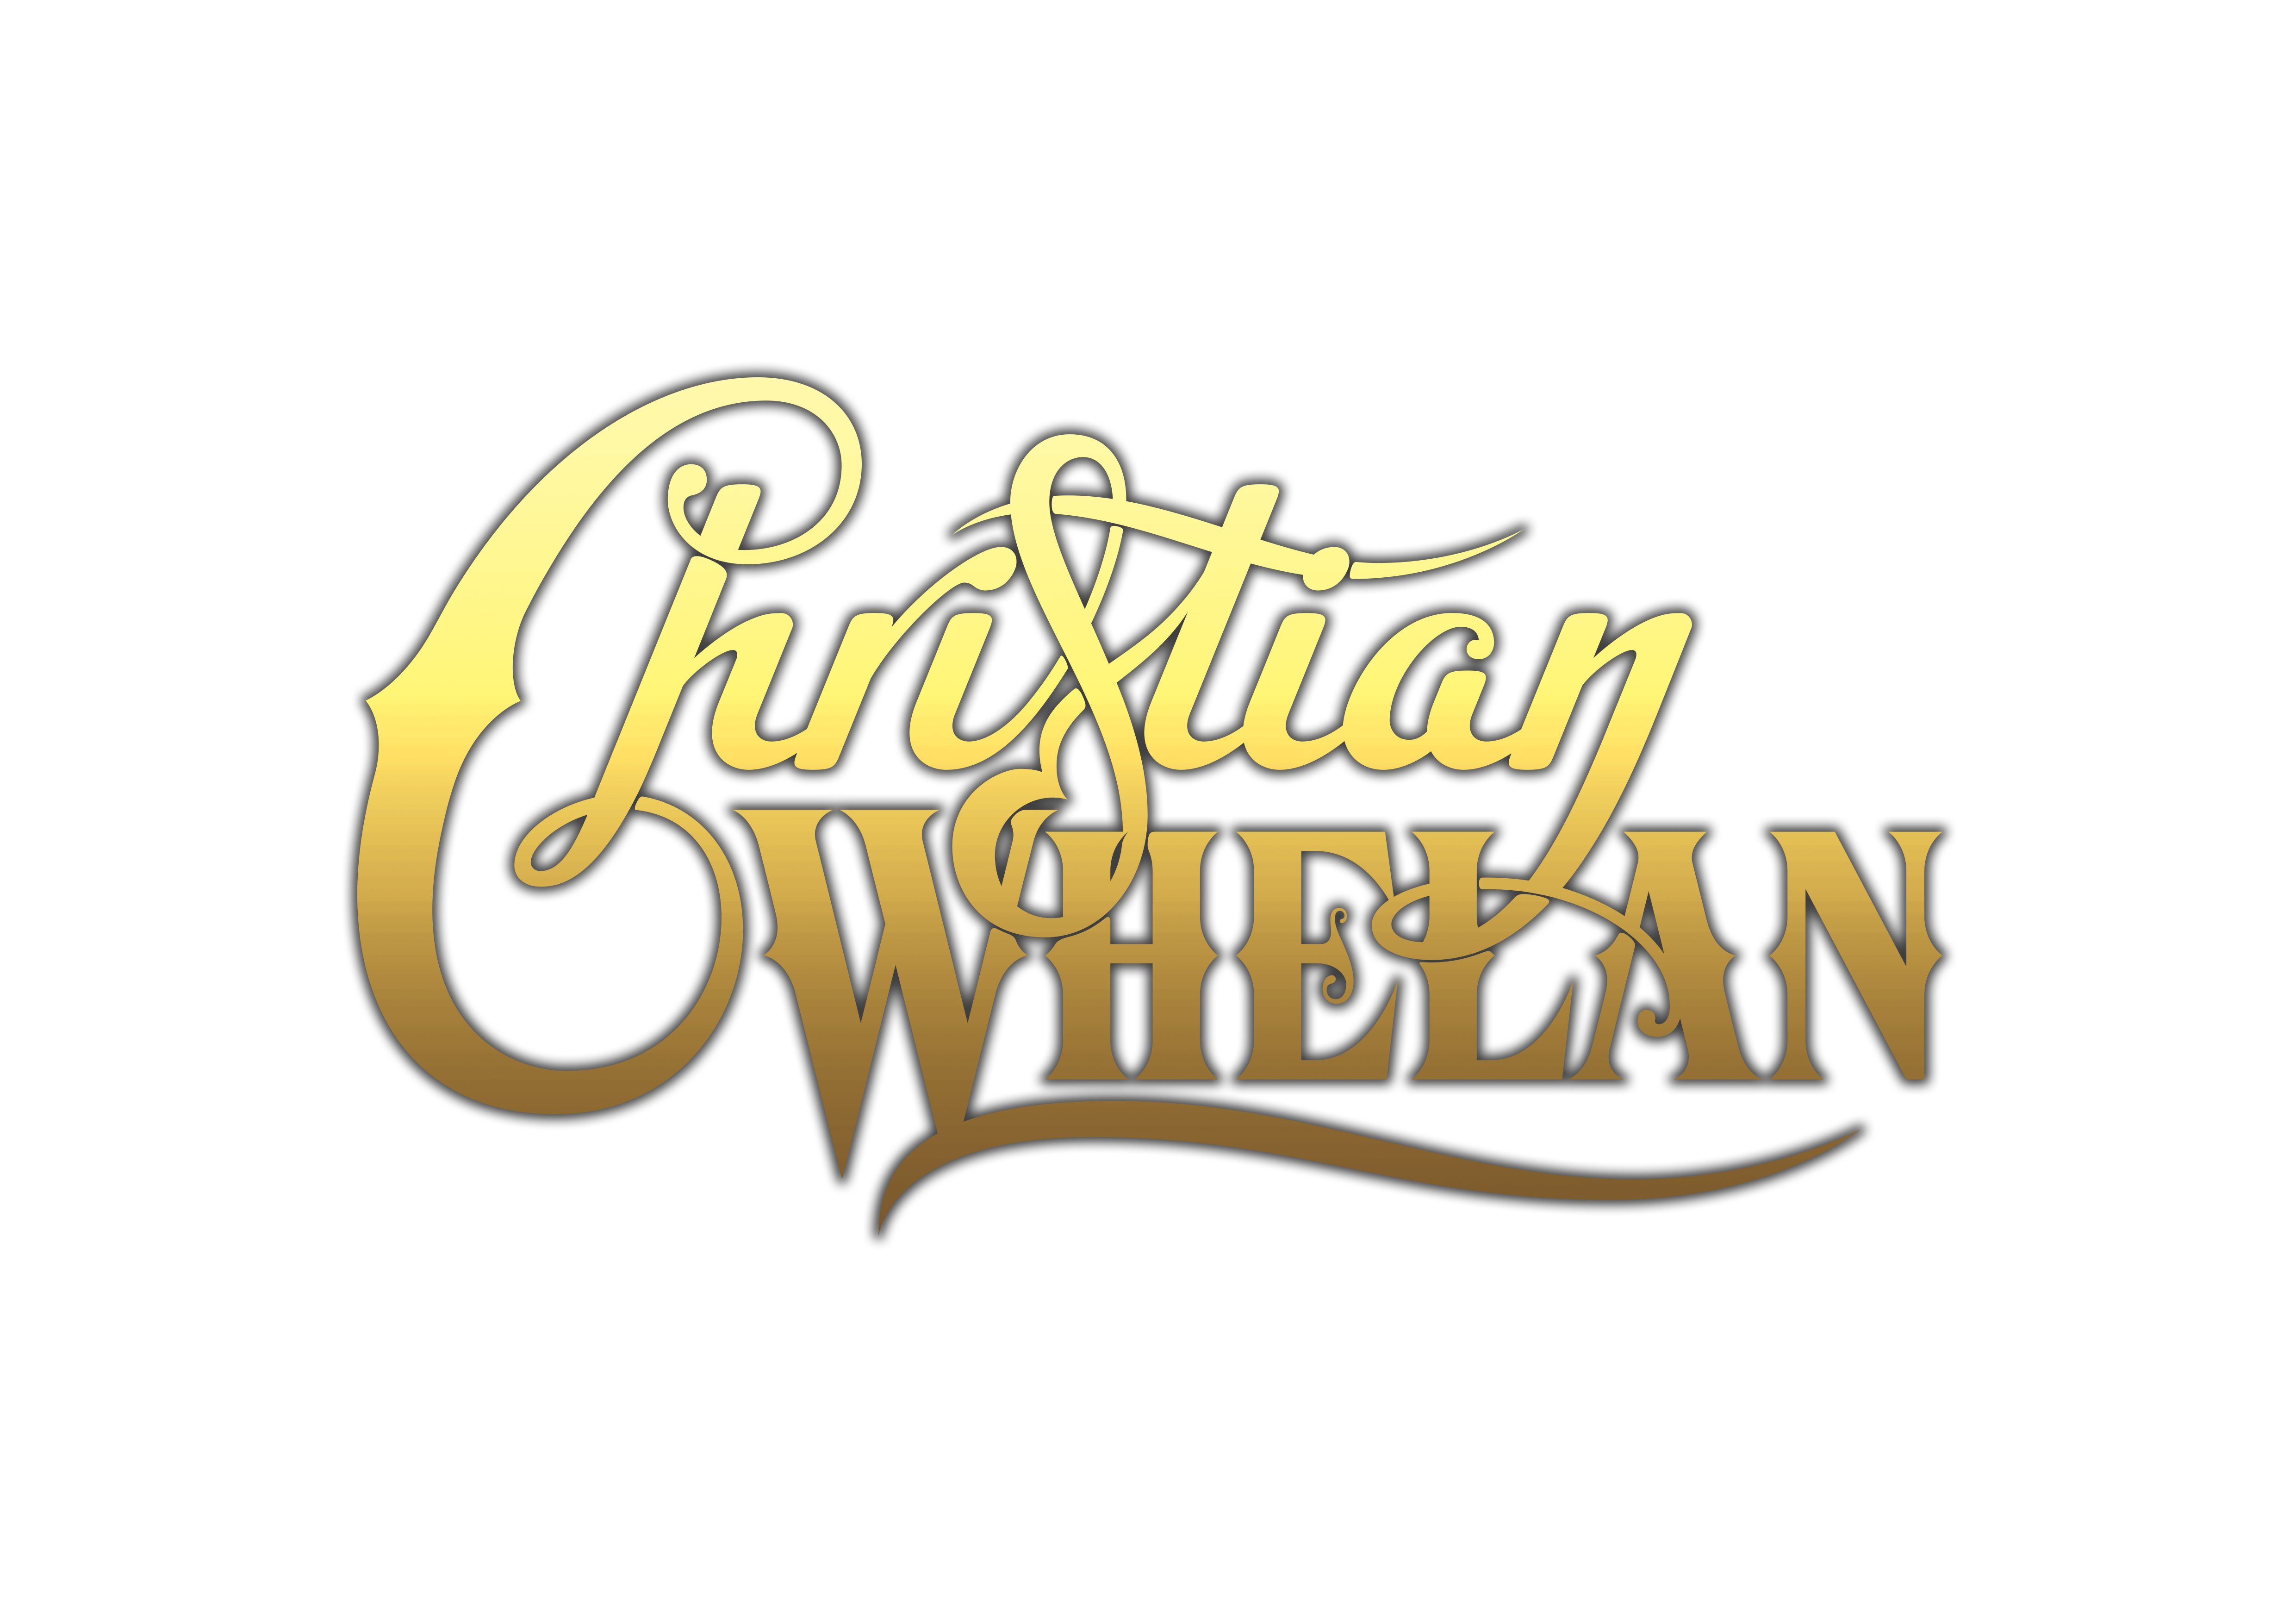 Christian Whelan